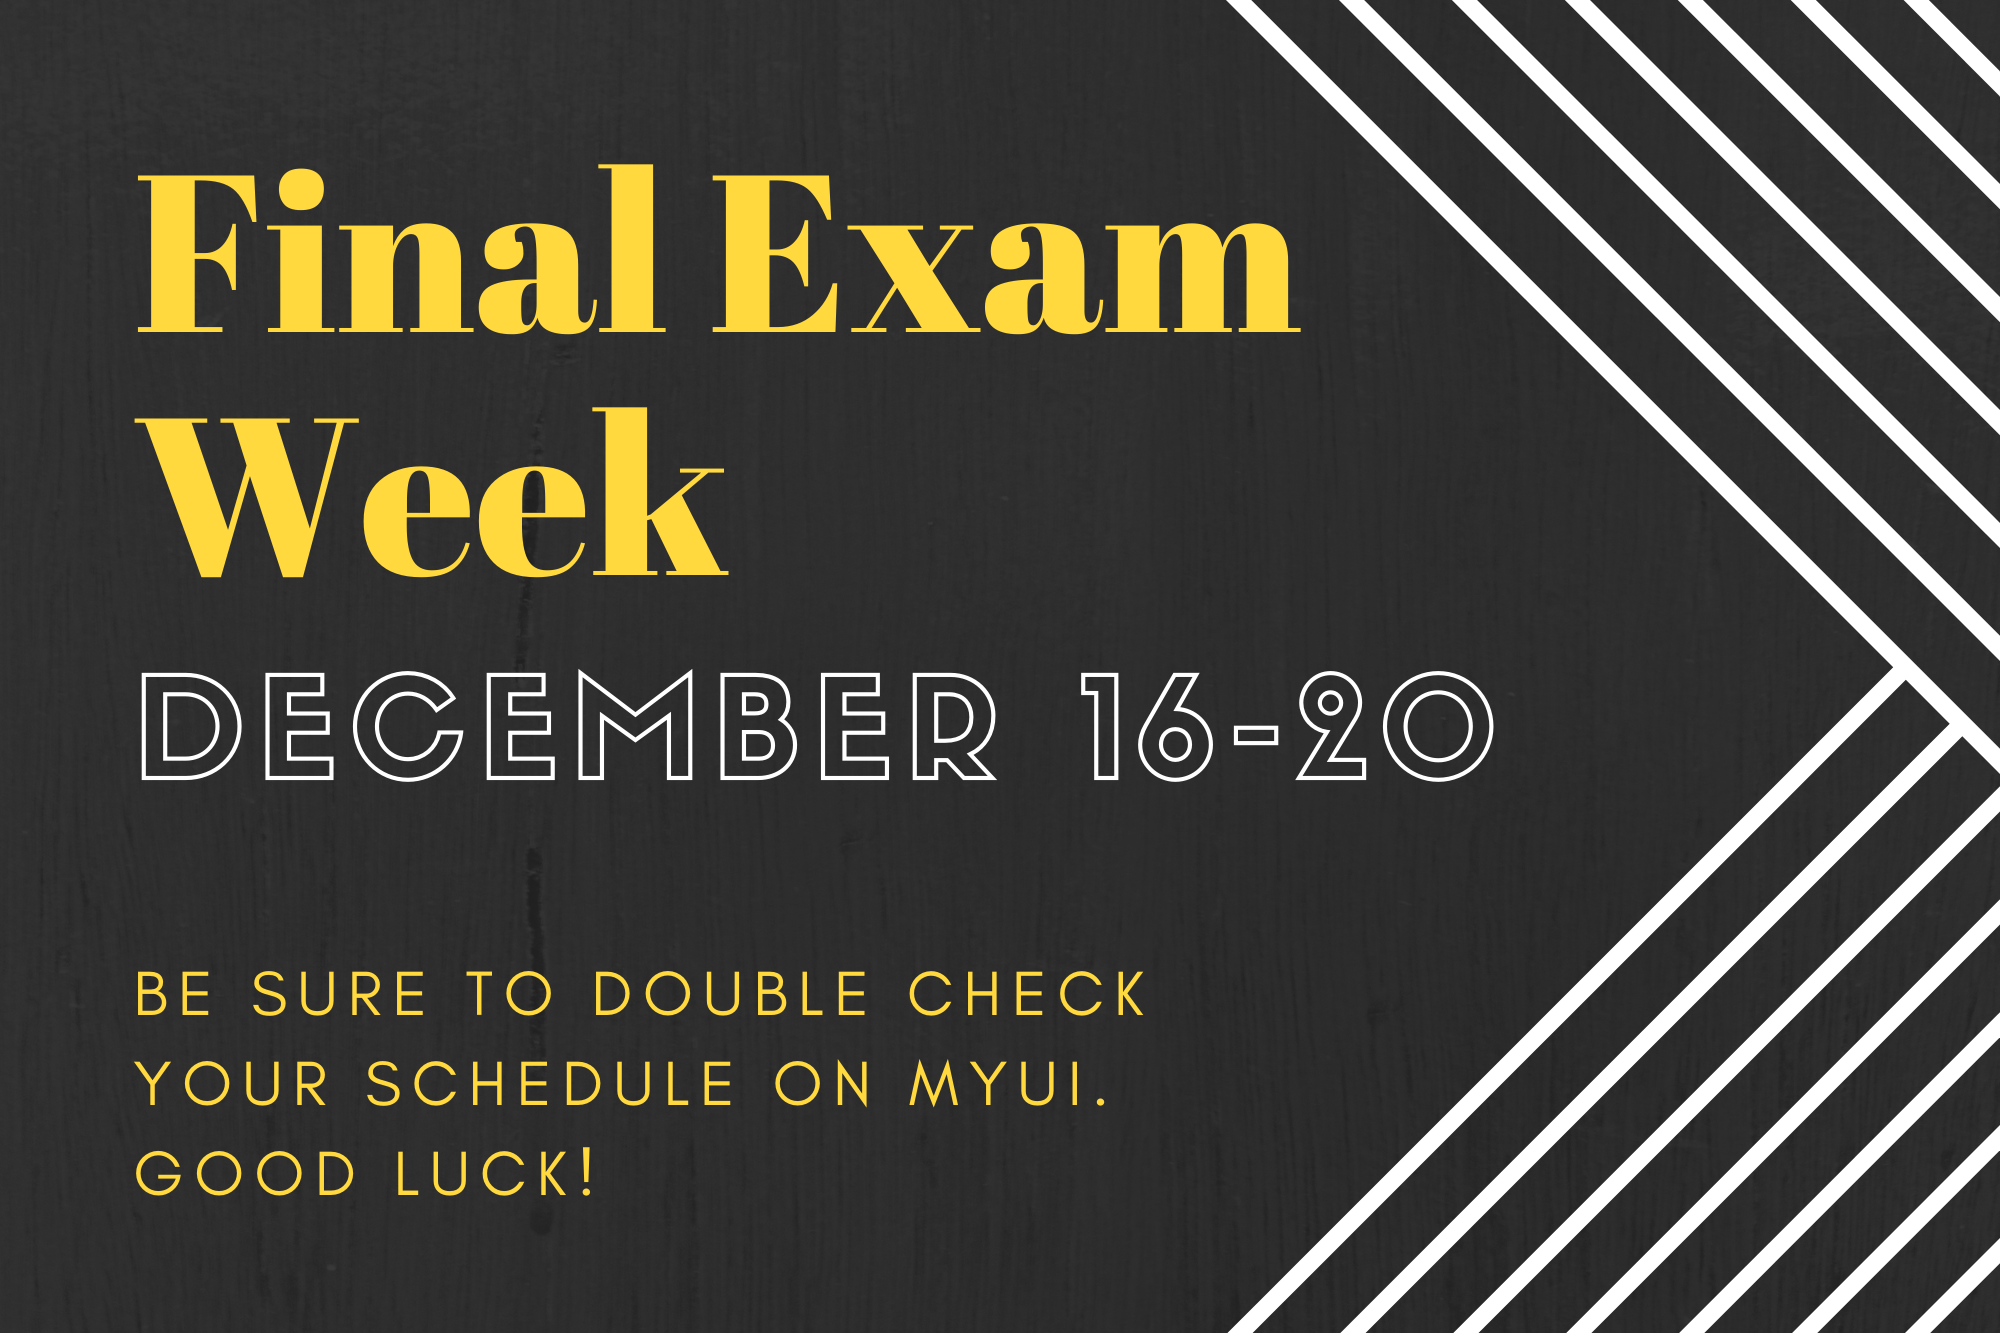 Final Exam week Dec 16-20